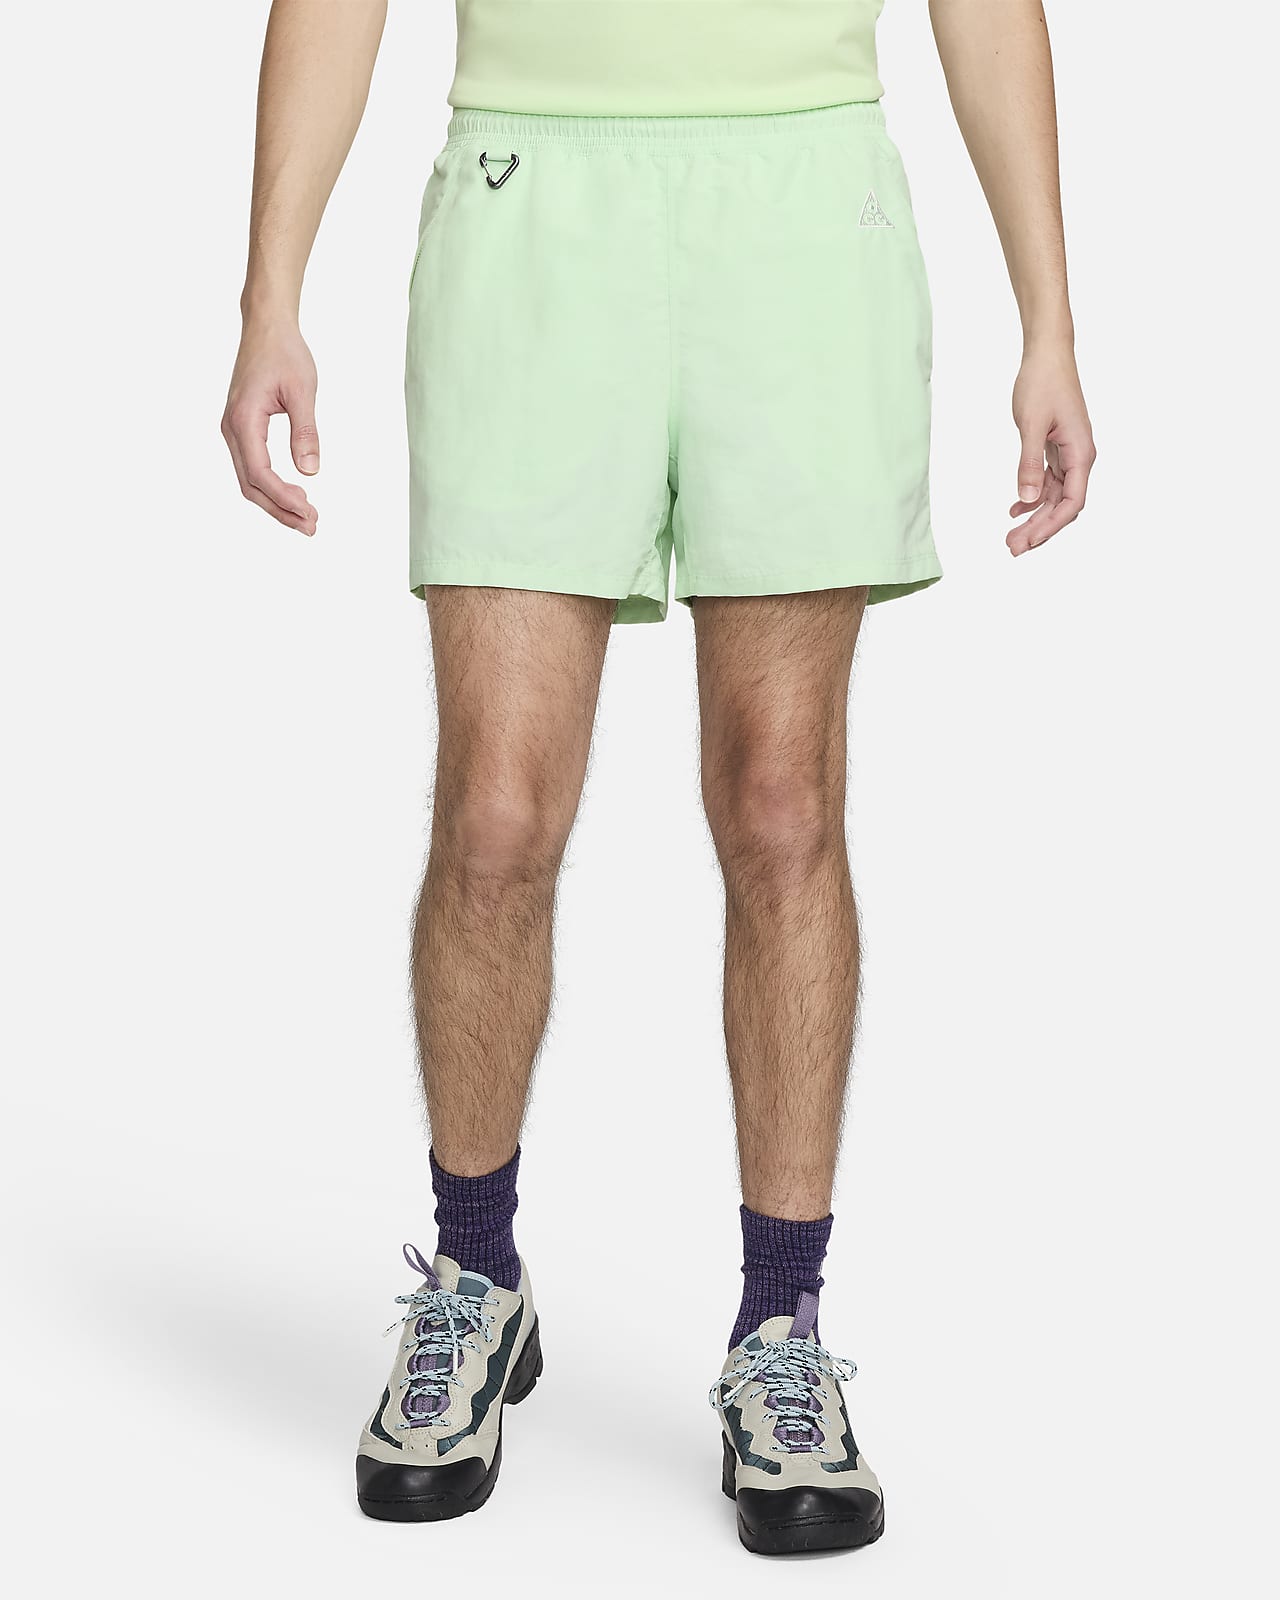 Shorts para hombre Nike ACG "Reservoir Goat"